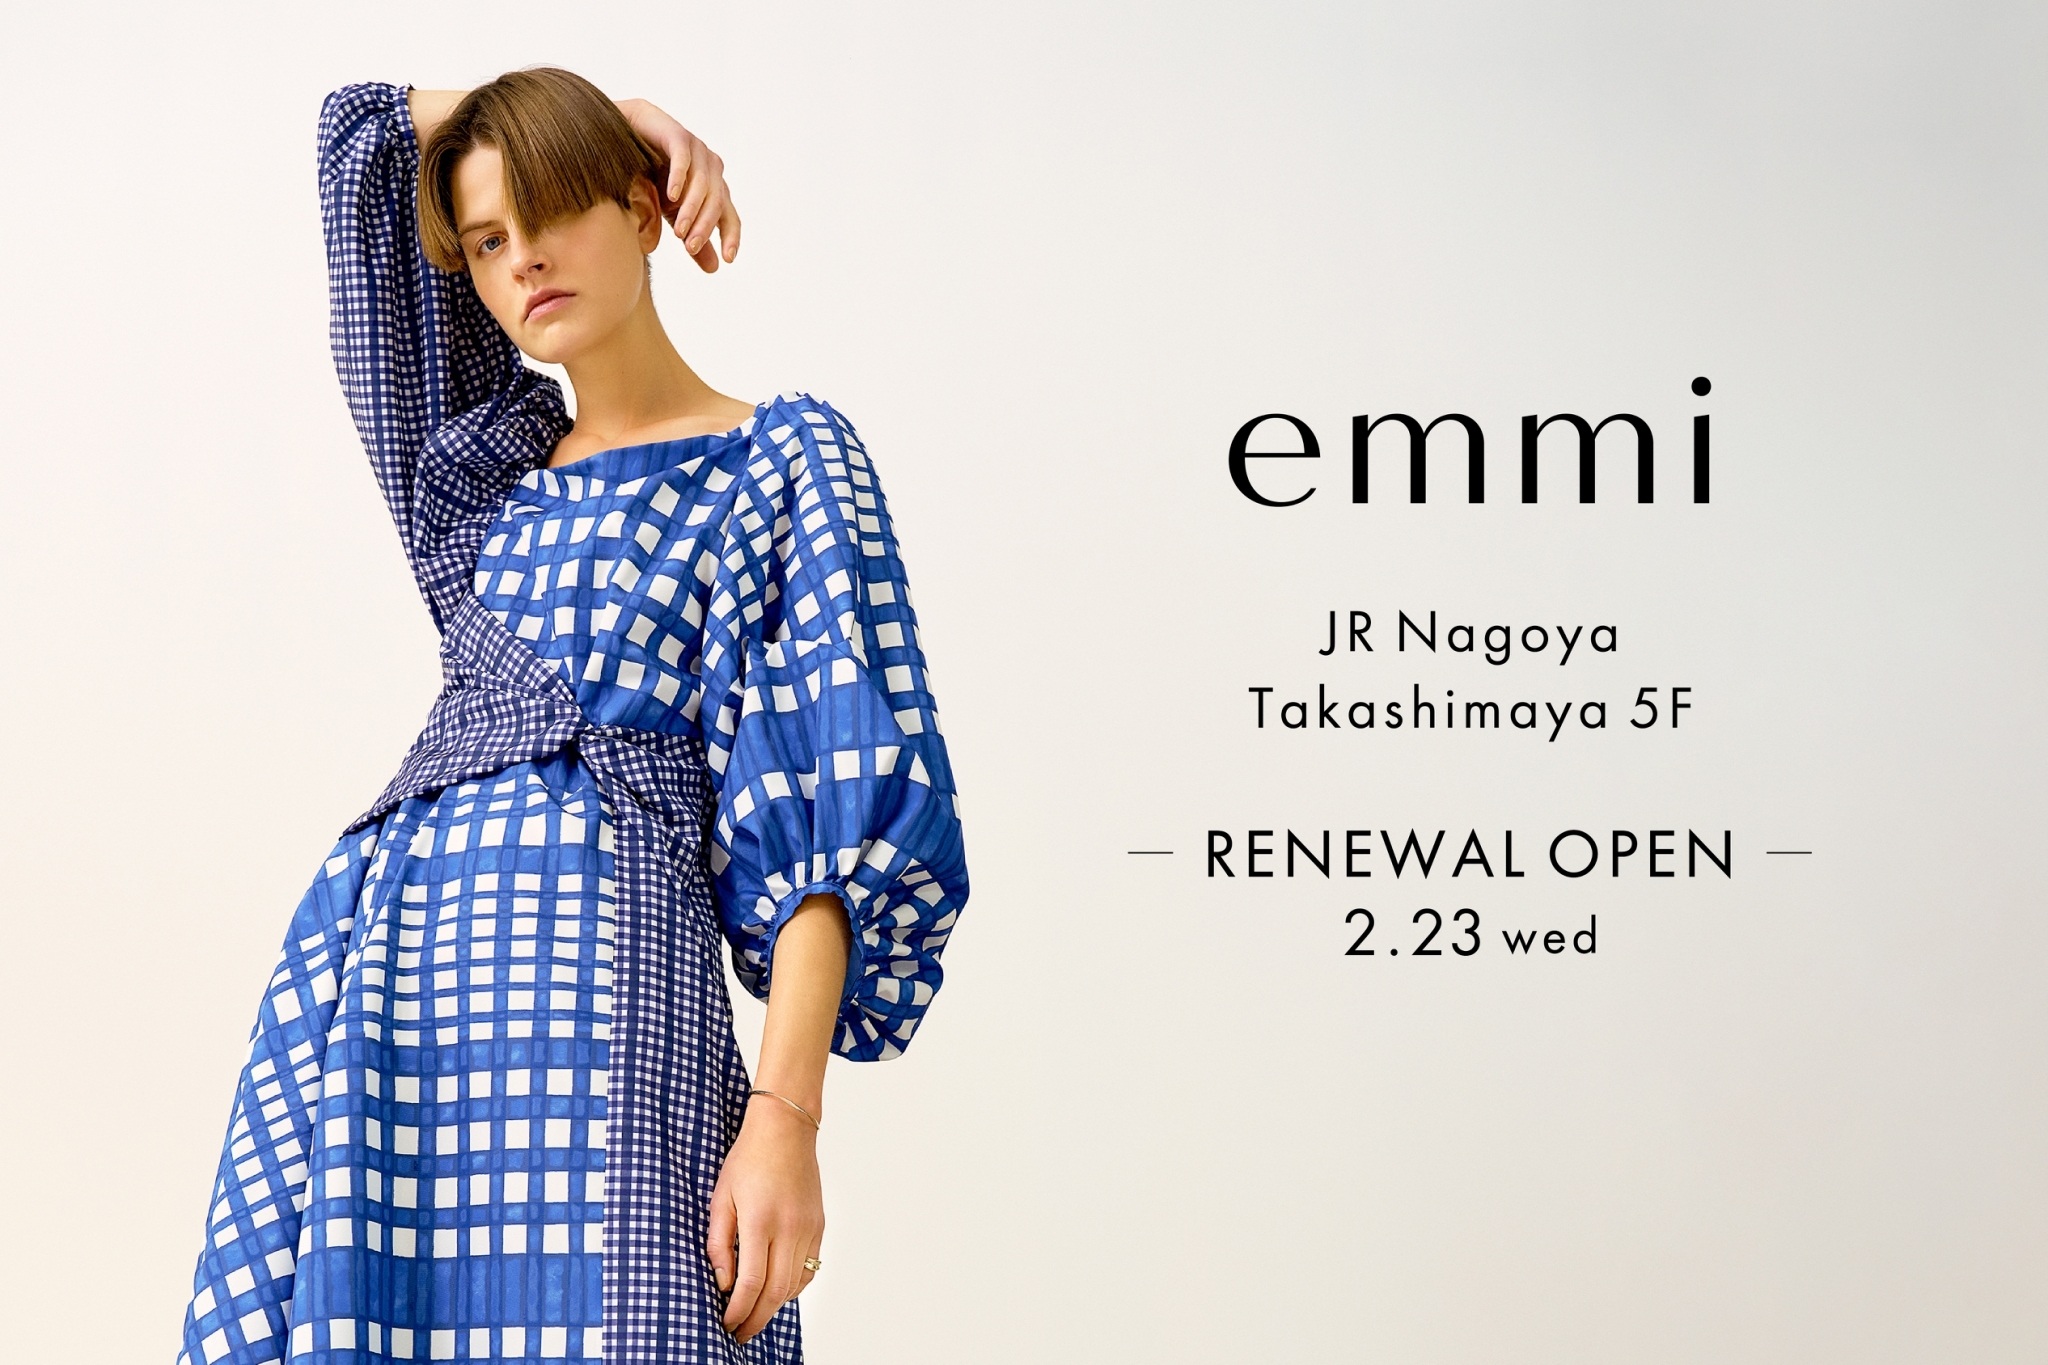 Emmi 名古屋タカシマヤ2月23日 水 リニューアルオープン 株式会社マッシュホールディングスのプレスリリース